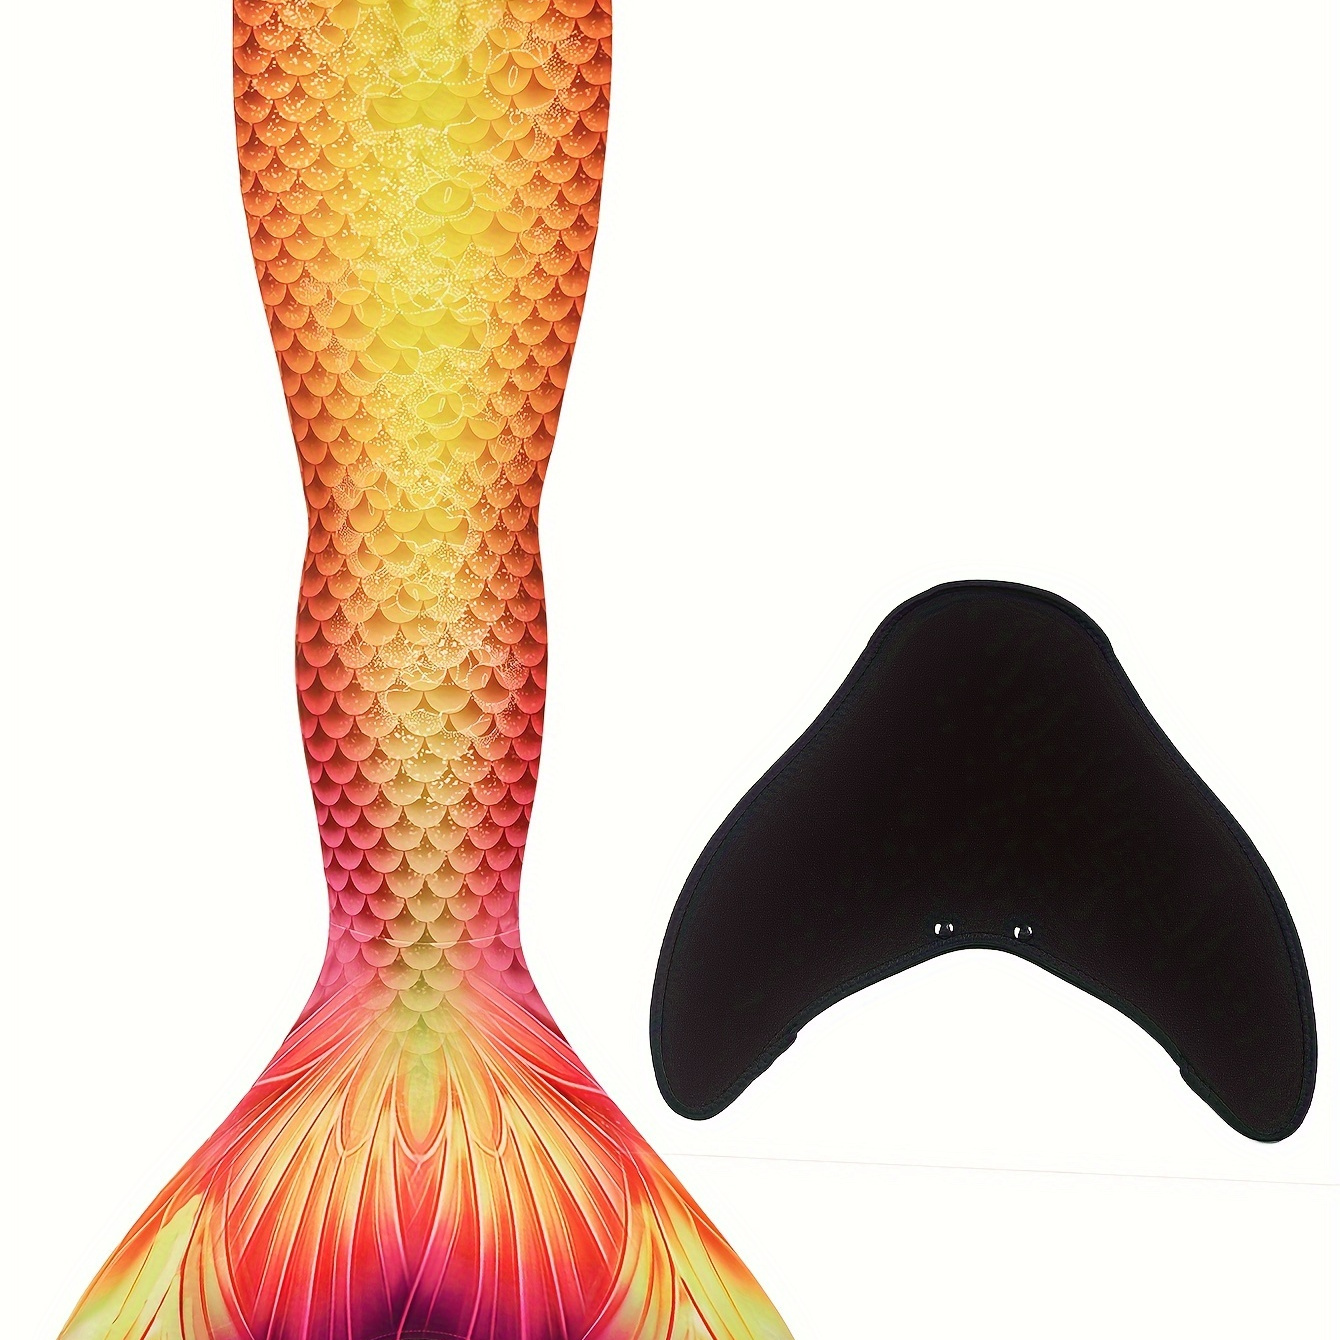 

2pcs Mermaid Swim Skirt + Single Fin Swimwear Set For Girls, Tie-dye Fish Scale Print Mermaid Tail Skirts Suitable For Beach Vacations, Parties, Performances